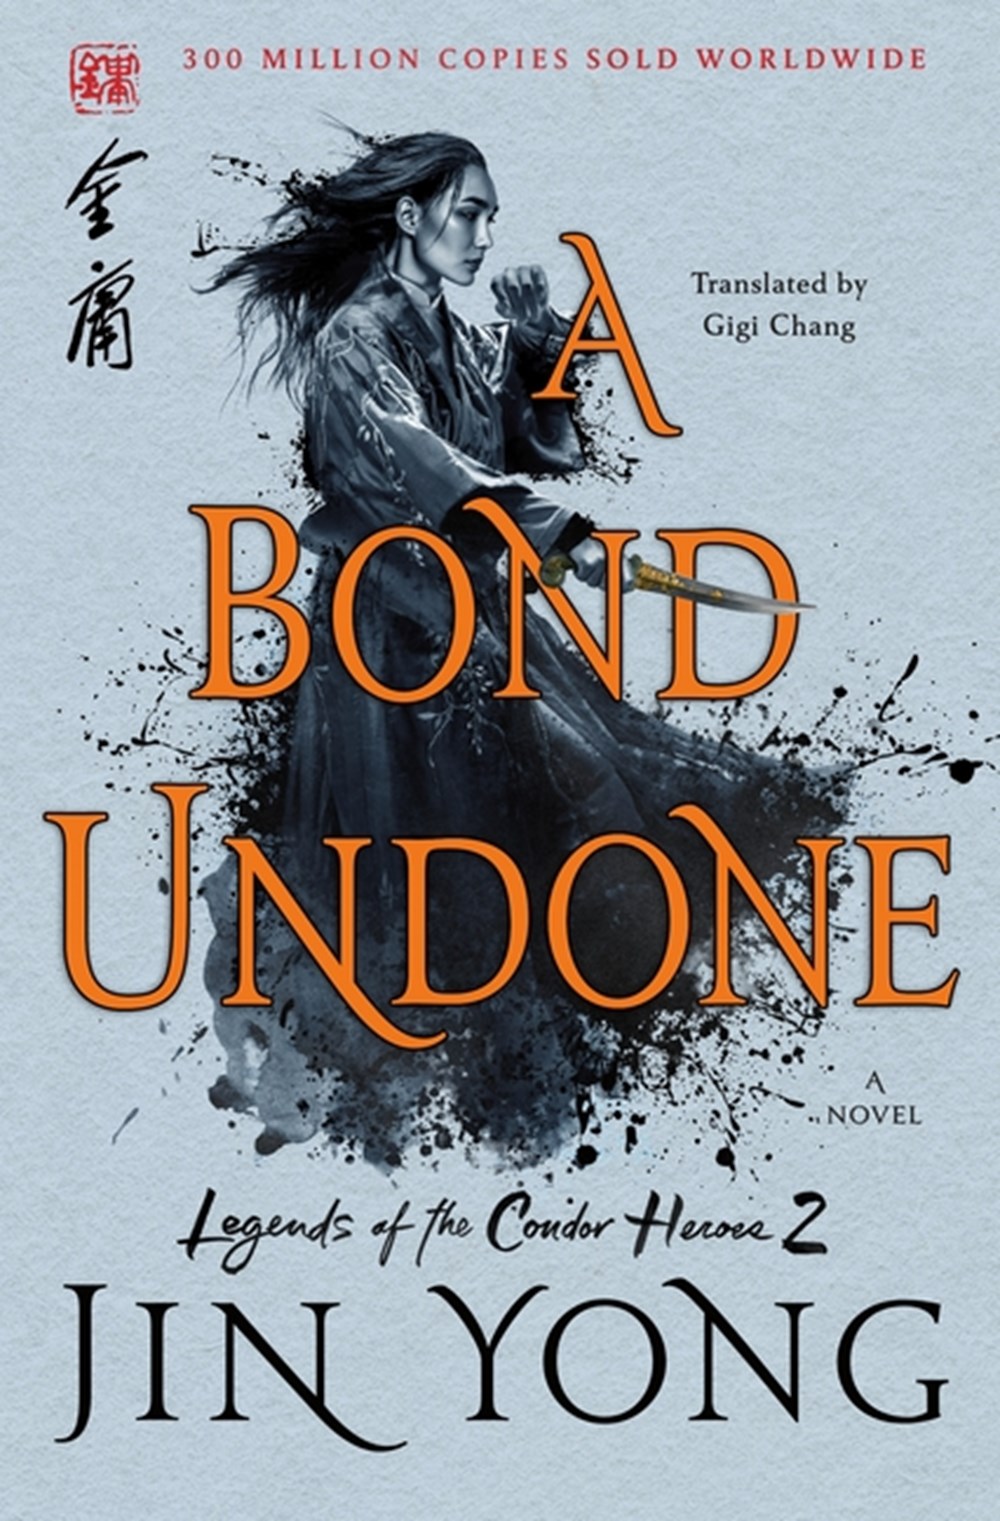 Bond Undone: The Definitive Edition